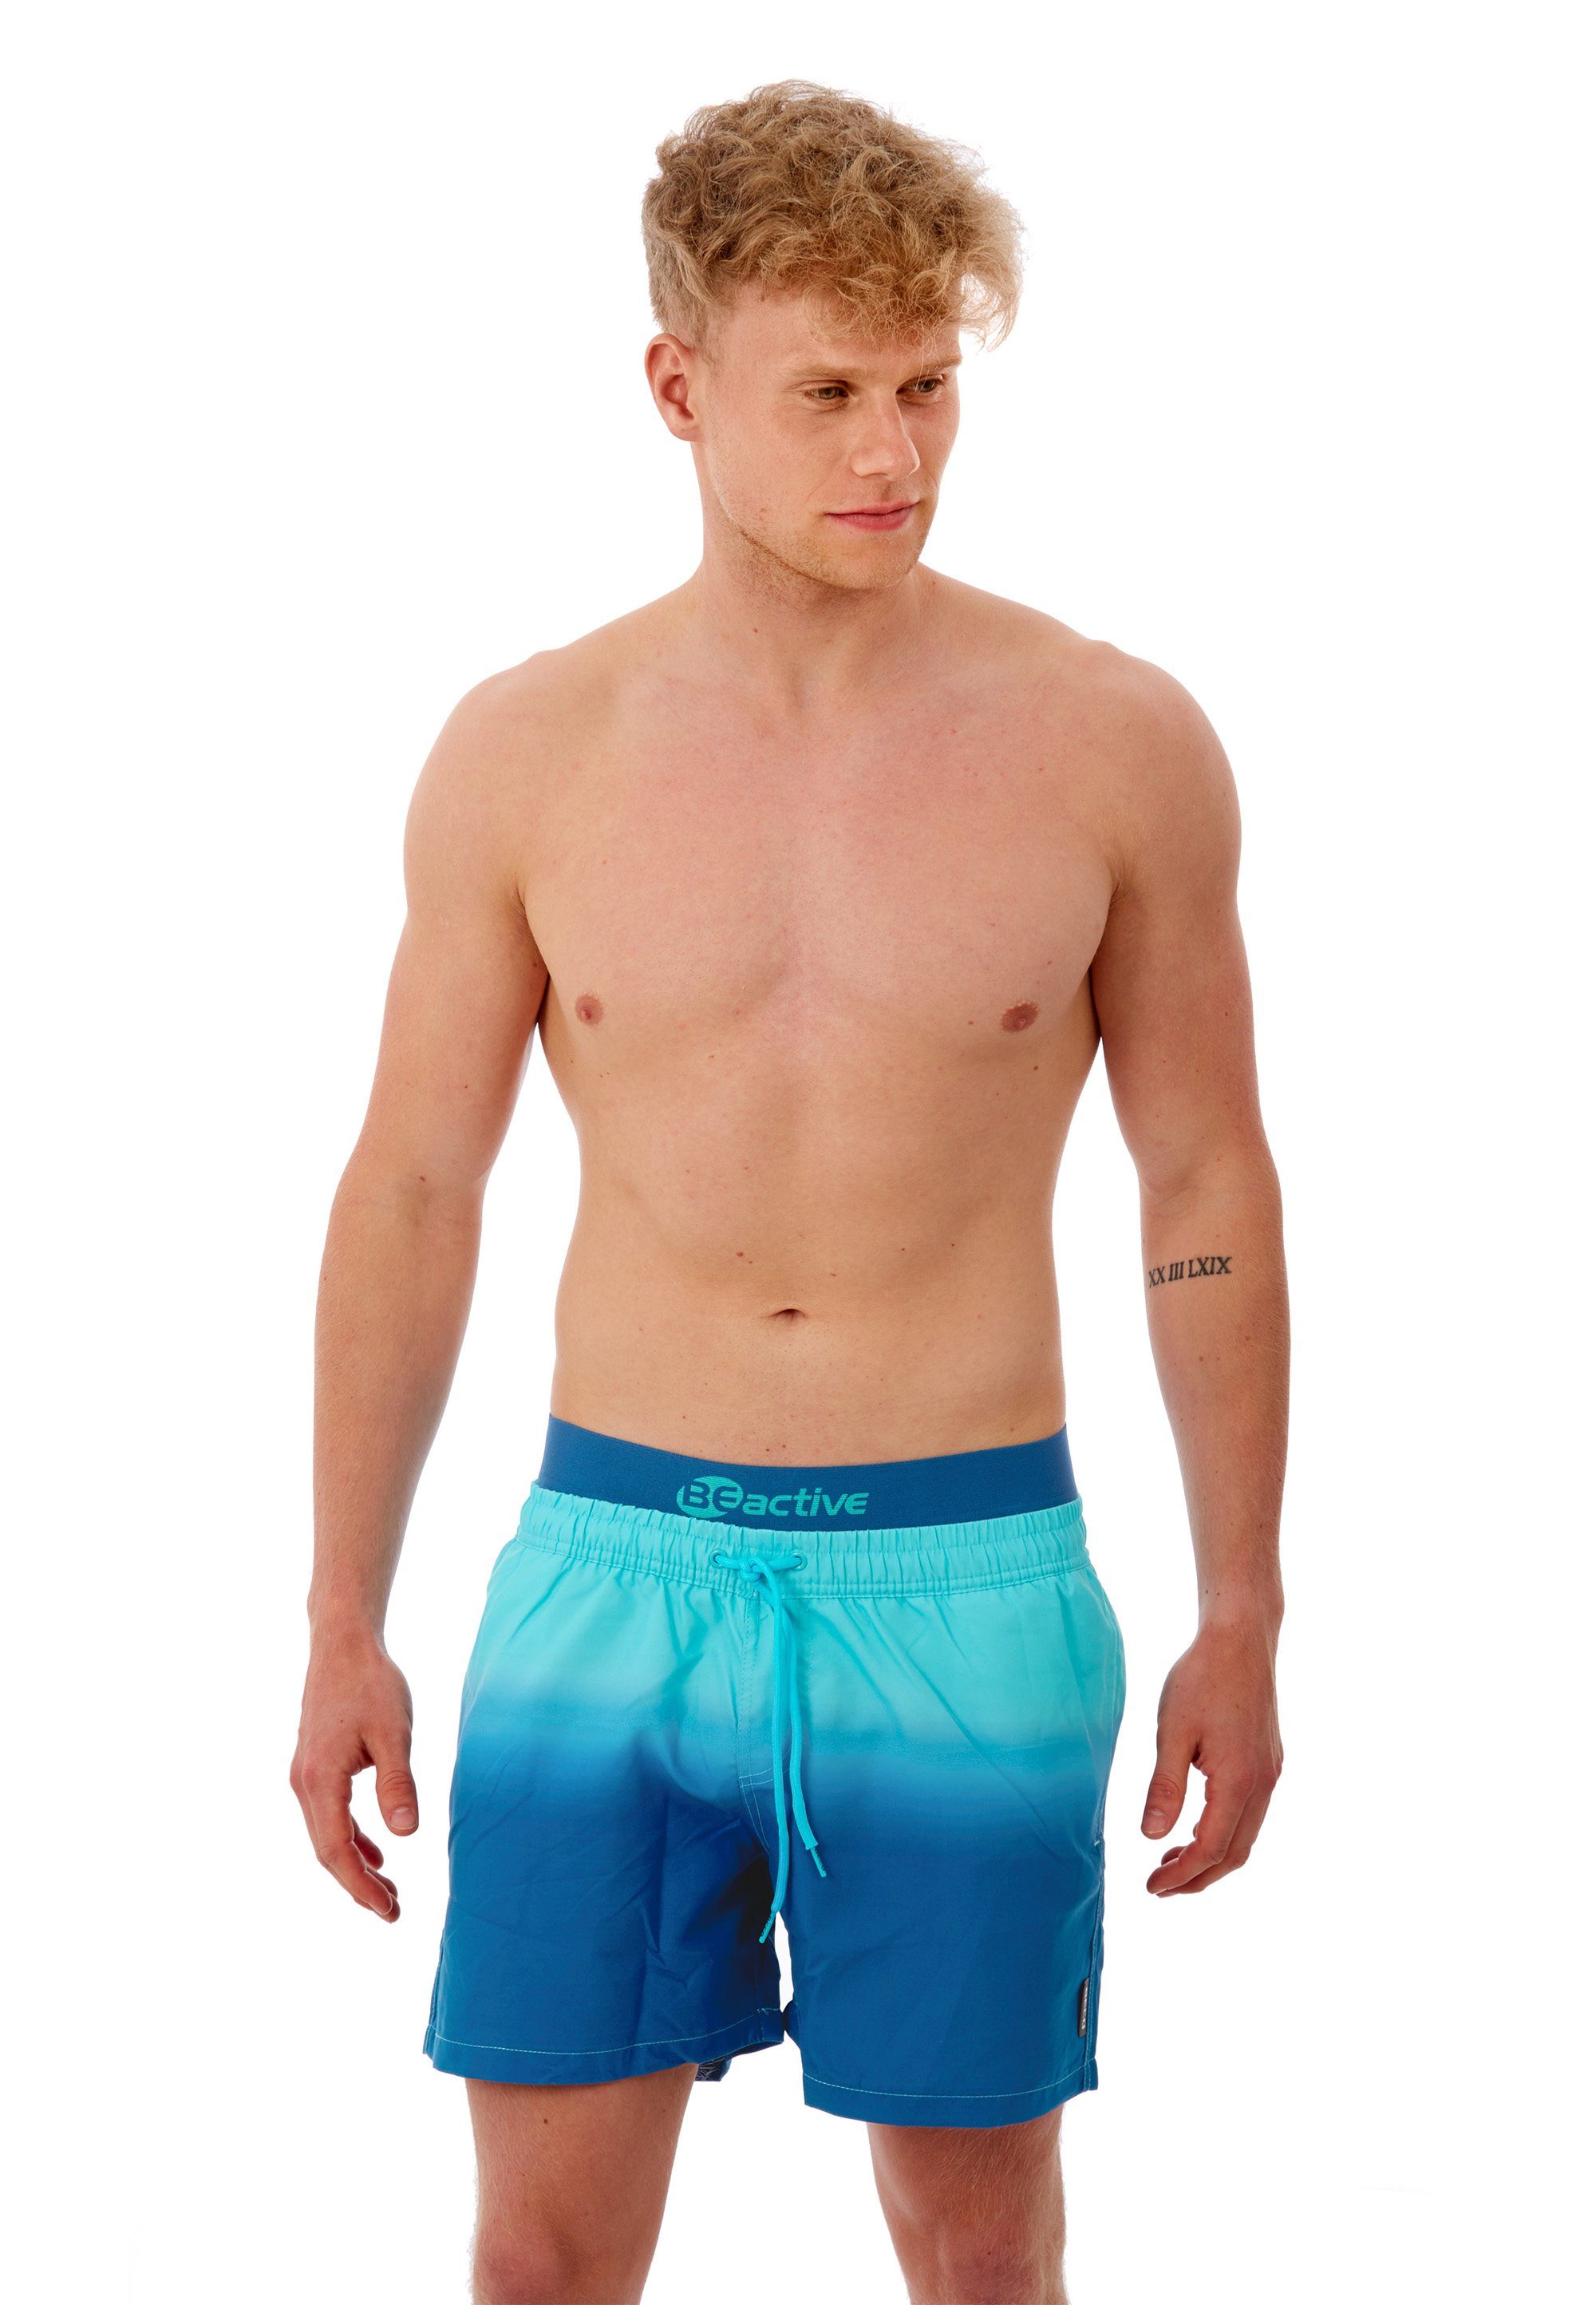 (1-St) Shorts dunkelblau Beco Badehose mit hellblau, BEactive Swim Farbverlauf Beermann coolem